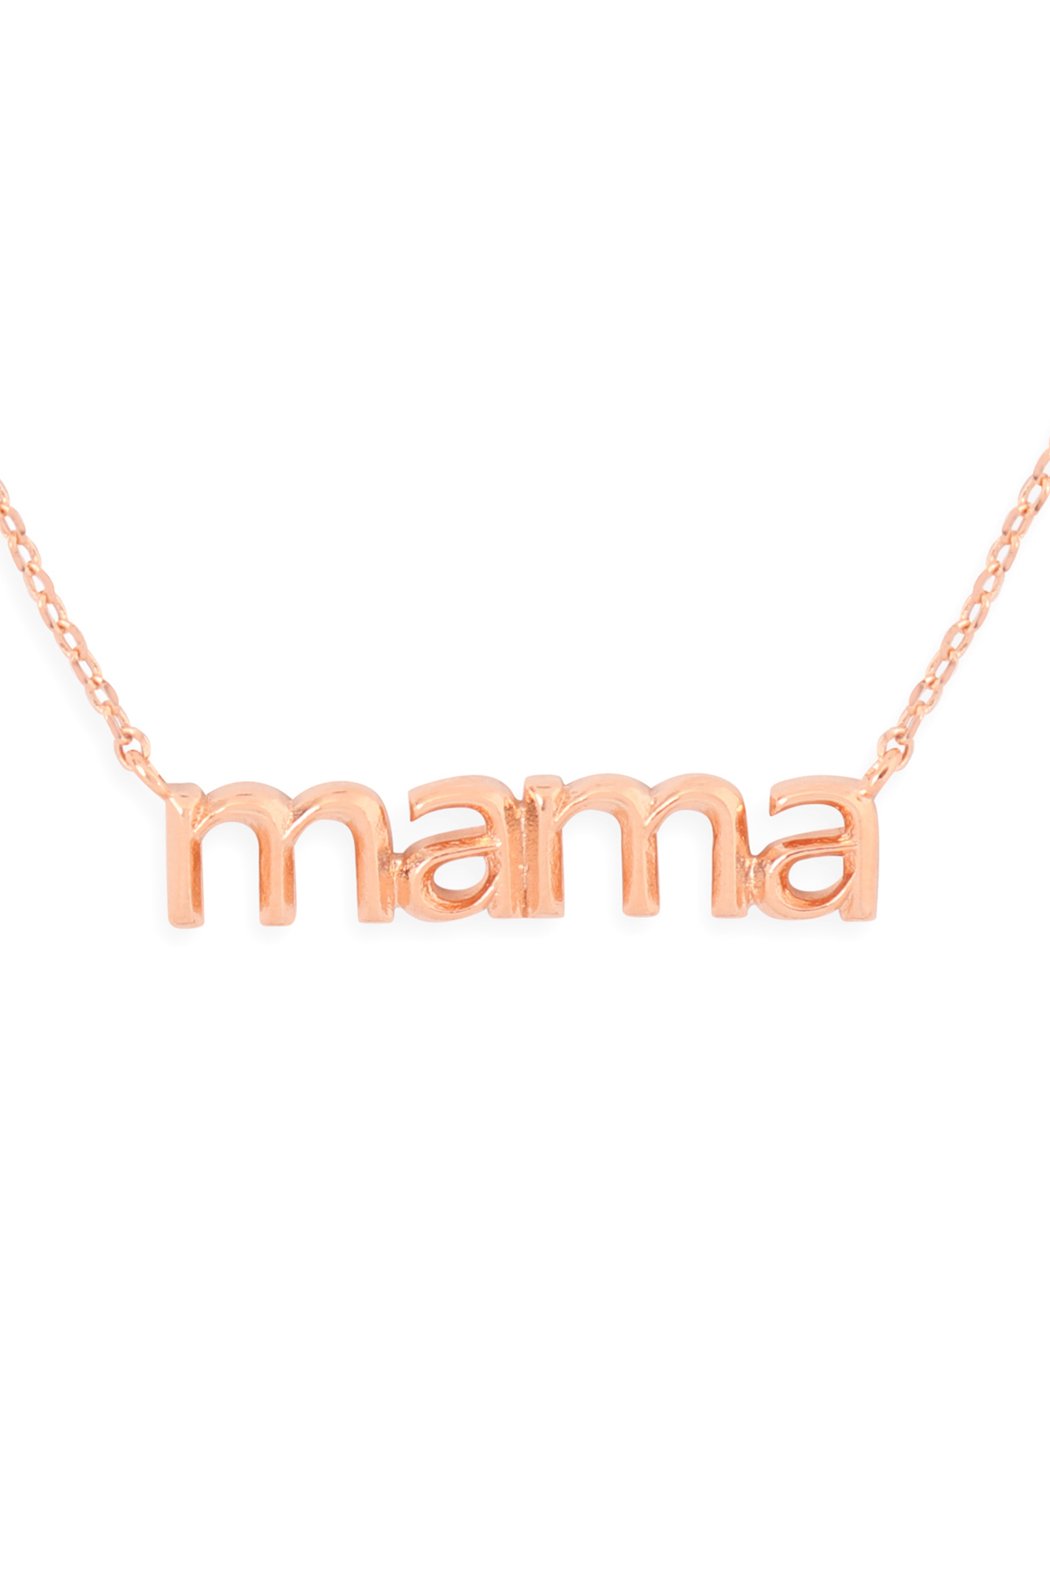 Hdnen512 - "Mama" Pendant Necklace